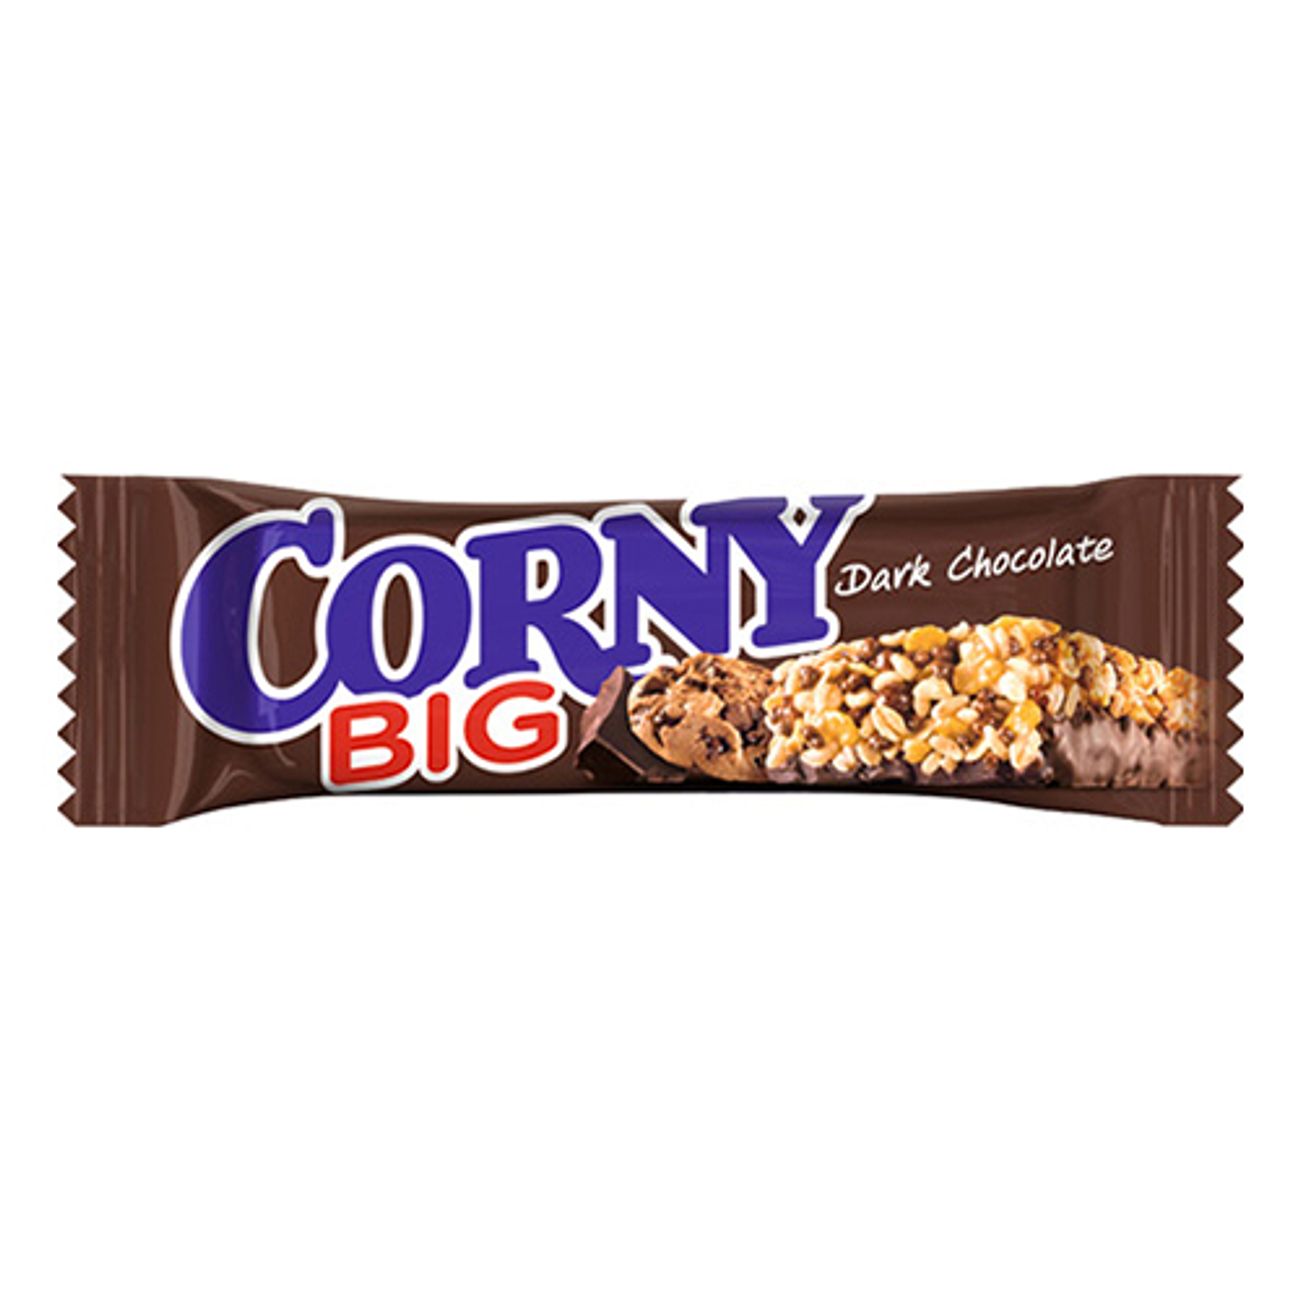 corny-big-dark-chocolate-1